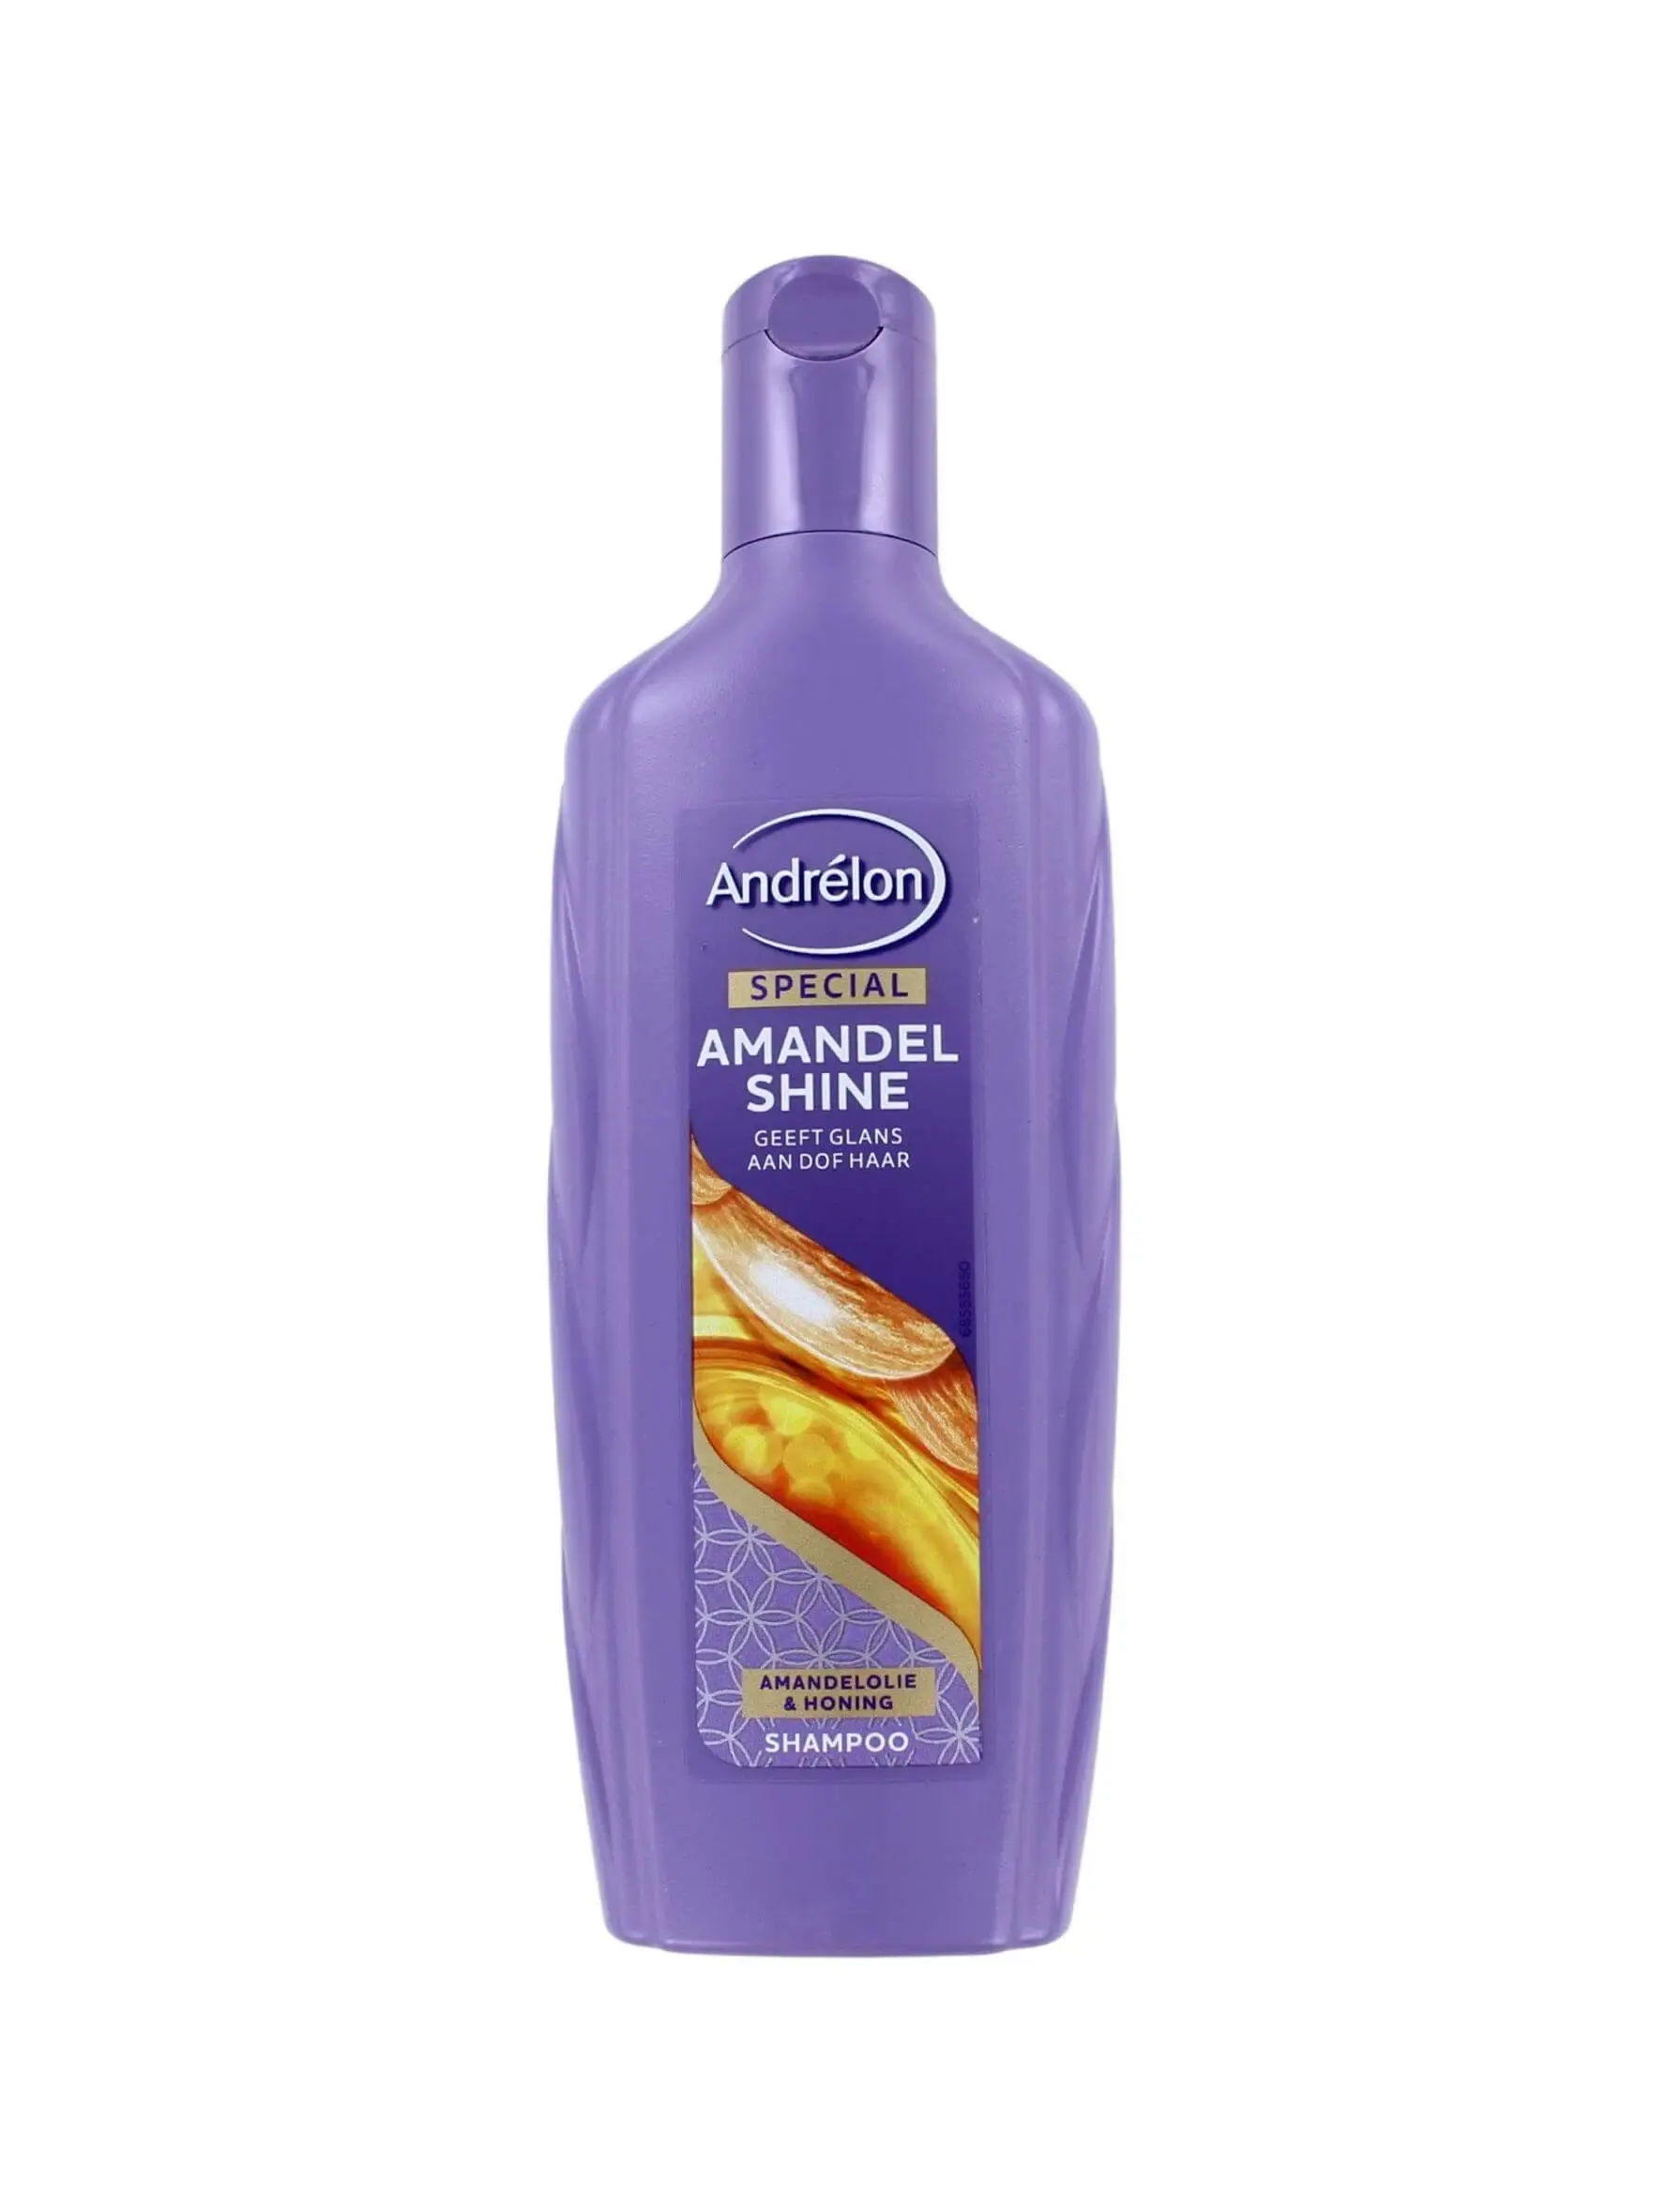 Andrelon Shampoo Amandel Shine 300 ml